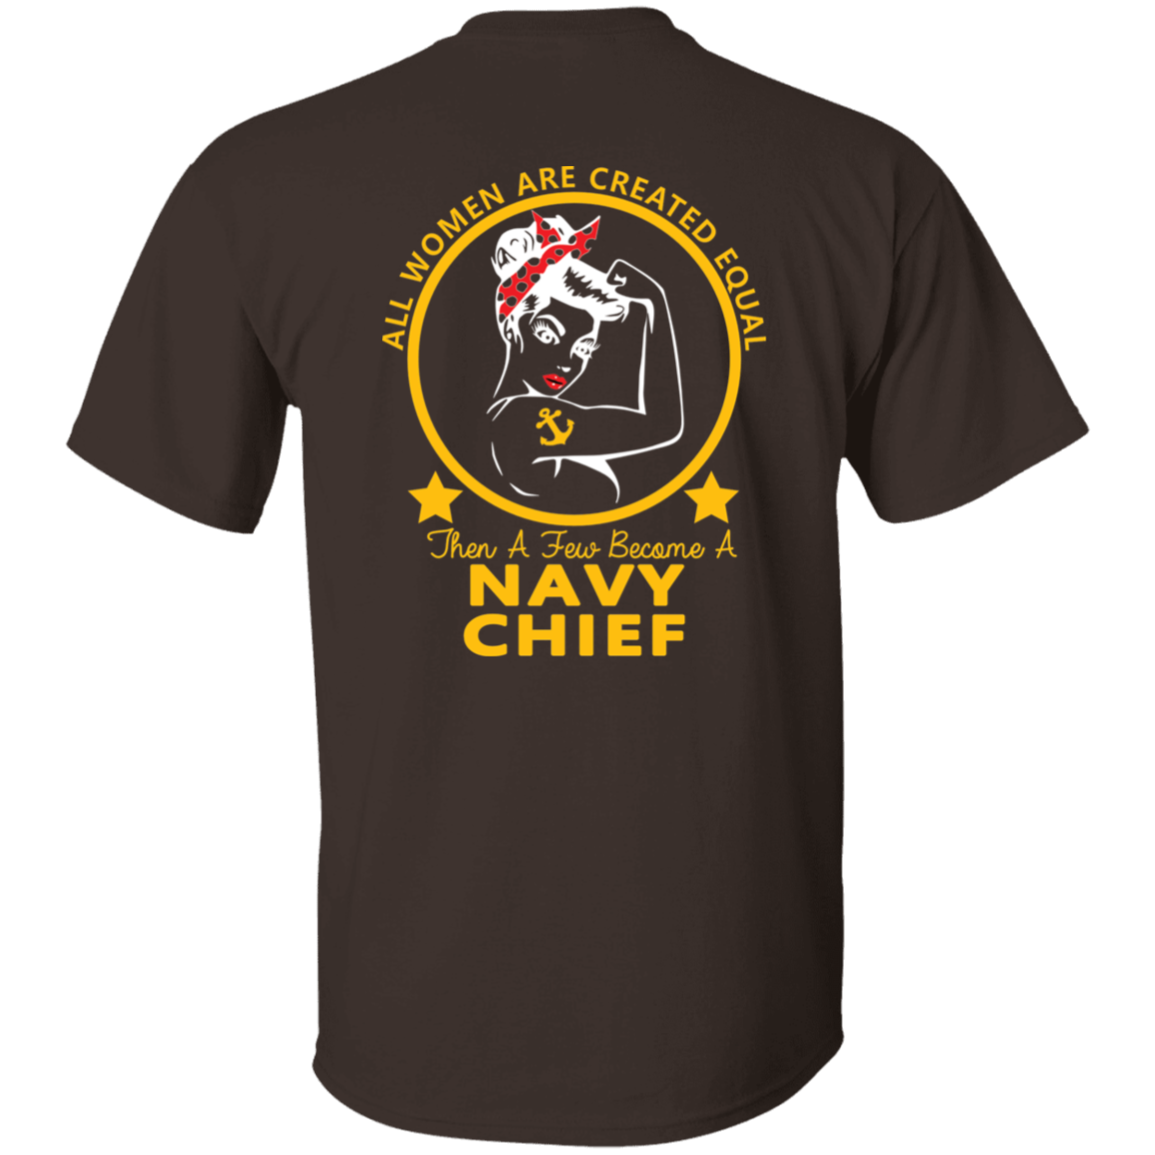 Navy Girl Gold and White Design T-Shirt